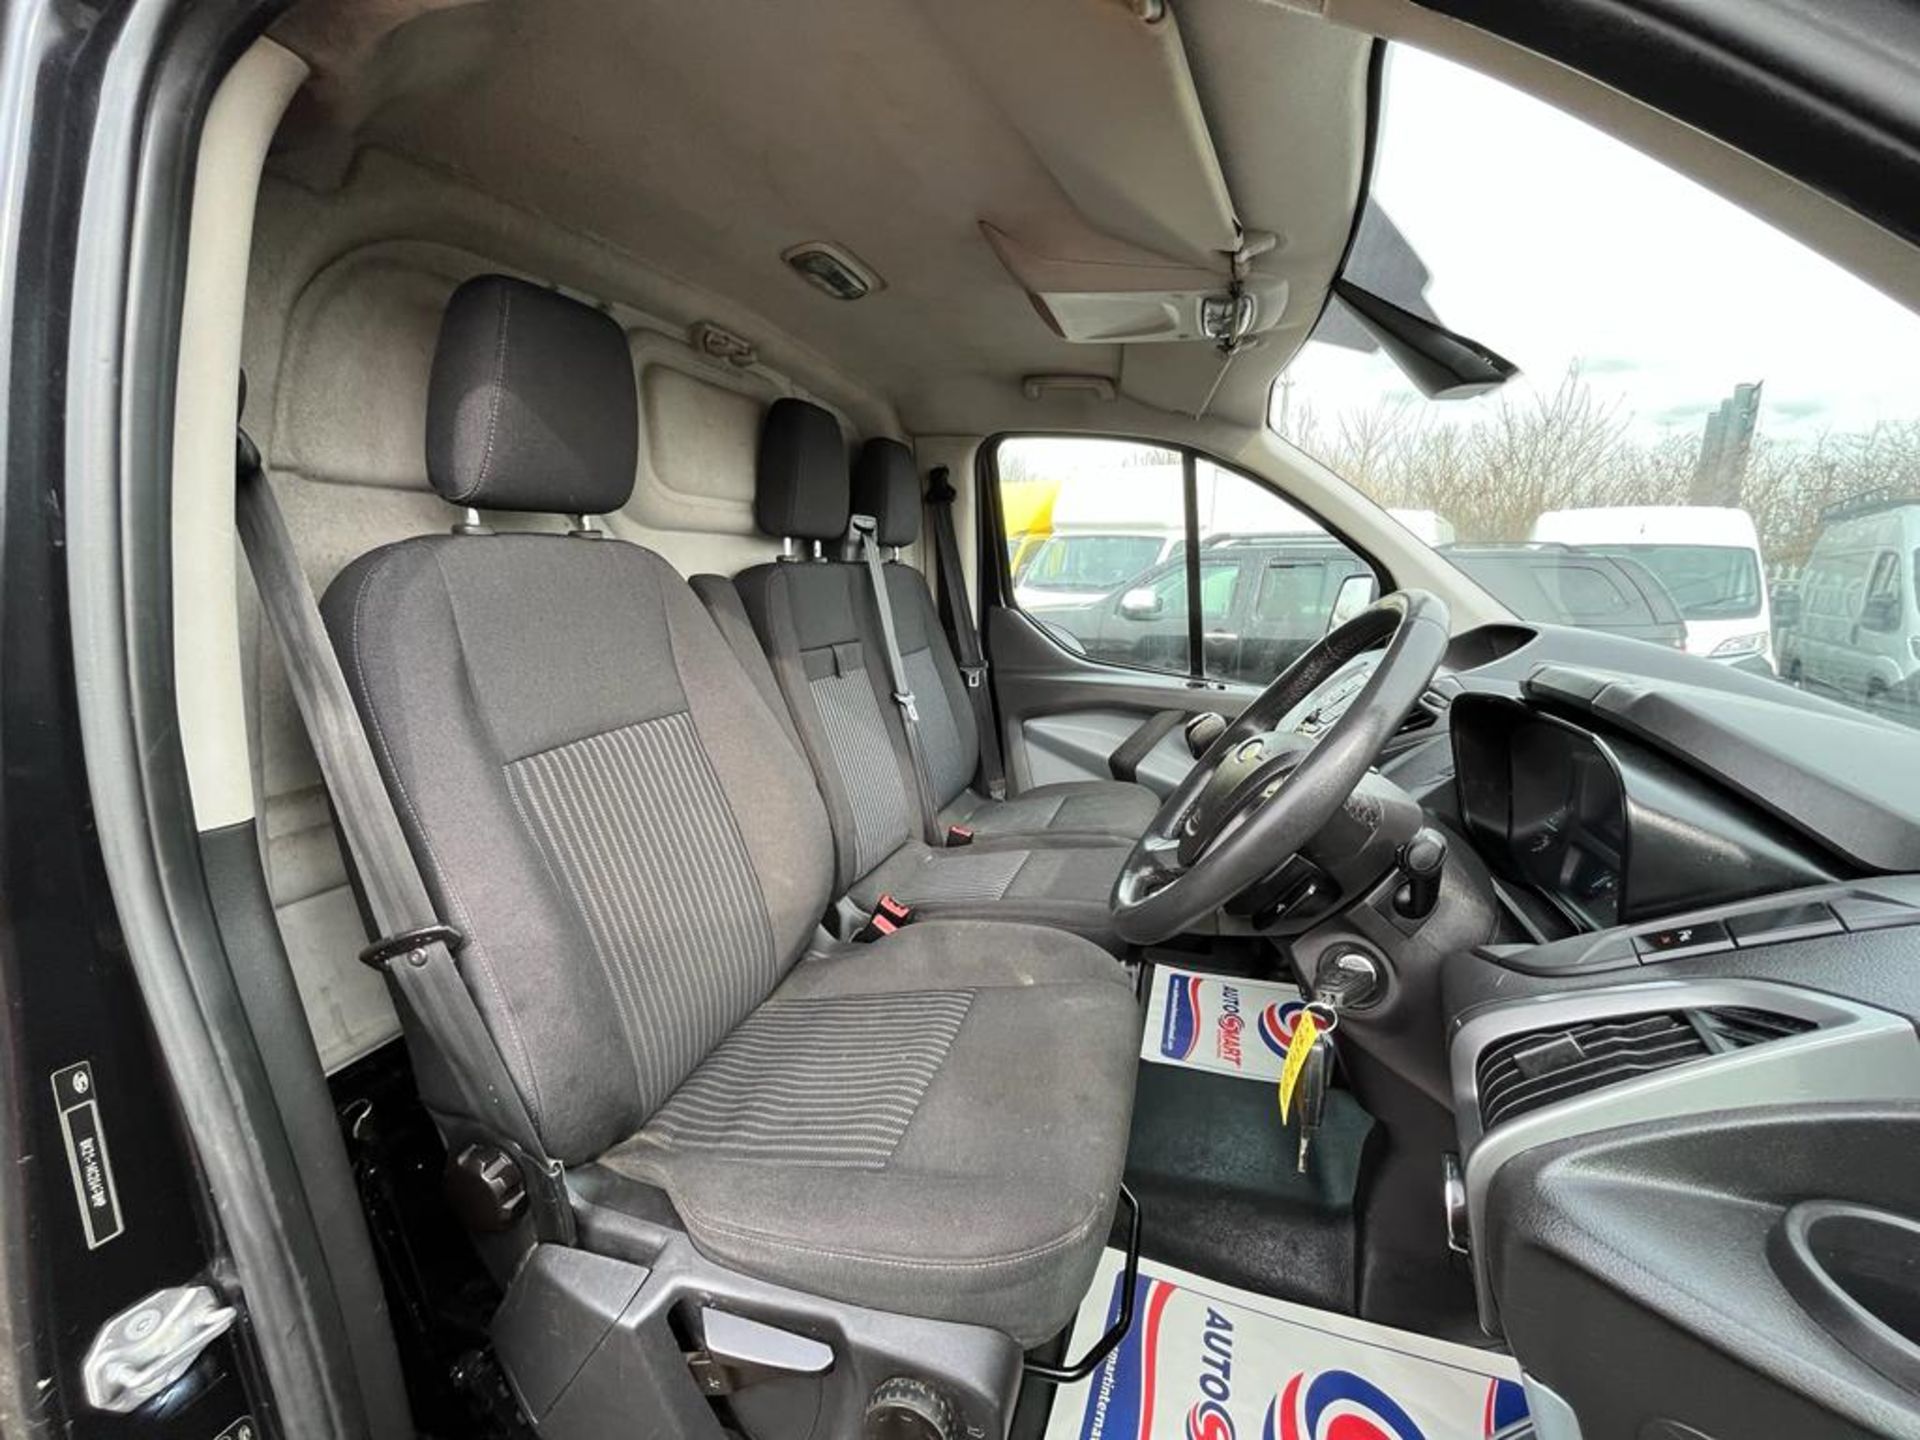 ** ON SALE ** Ford Transit Custom 2.2 TDCI 270 E-Tech Trend L1 H1 2015 '15 Reg' - Panel Van - Image 14 of 23